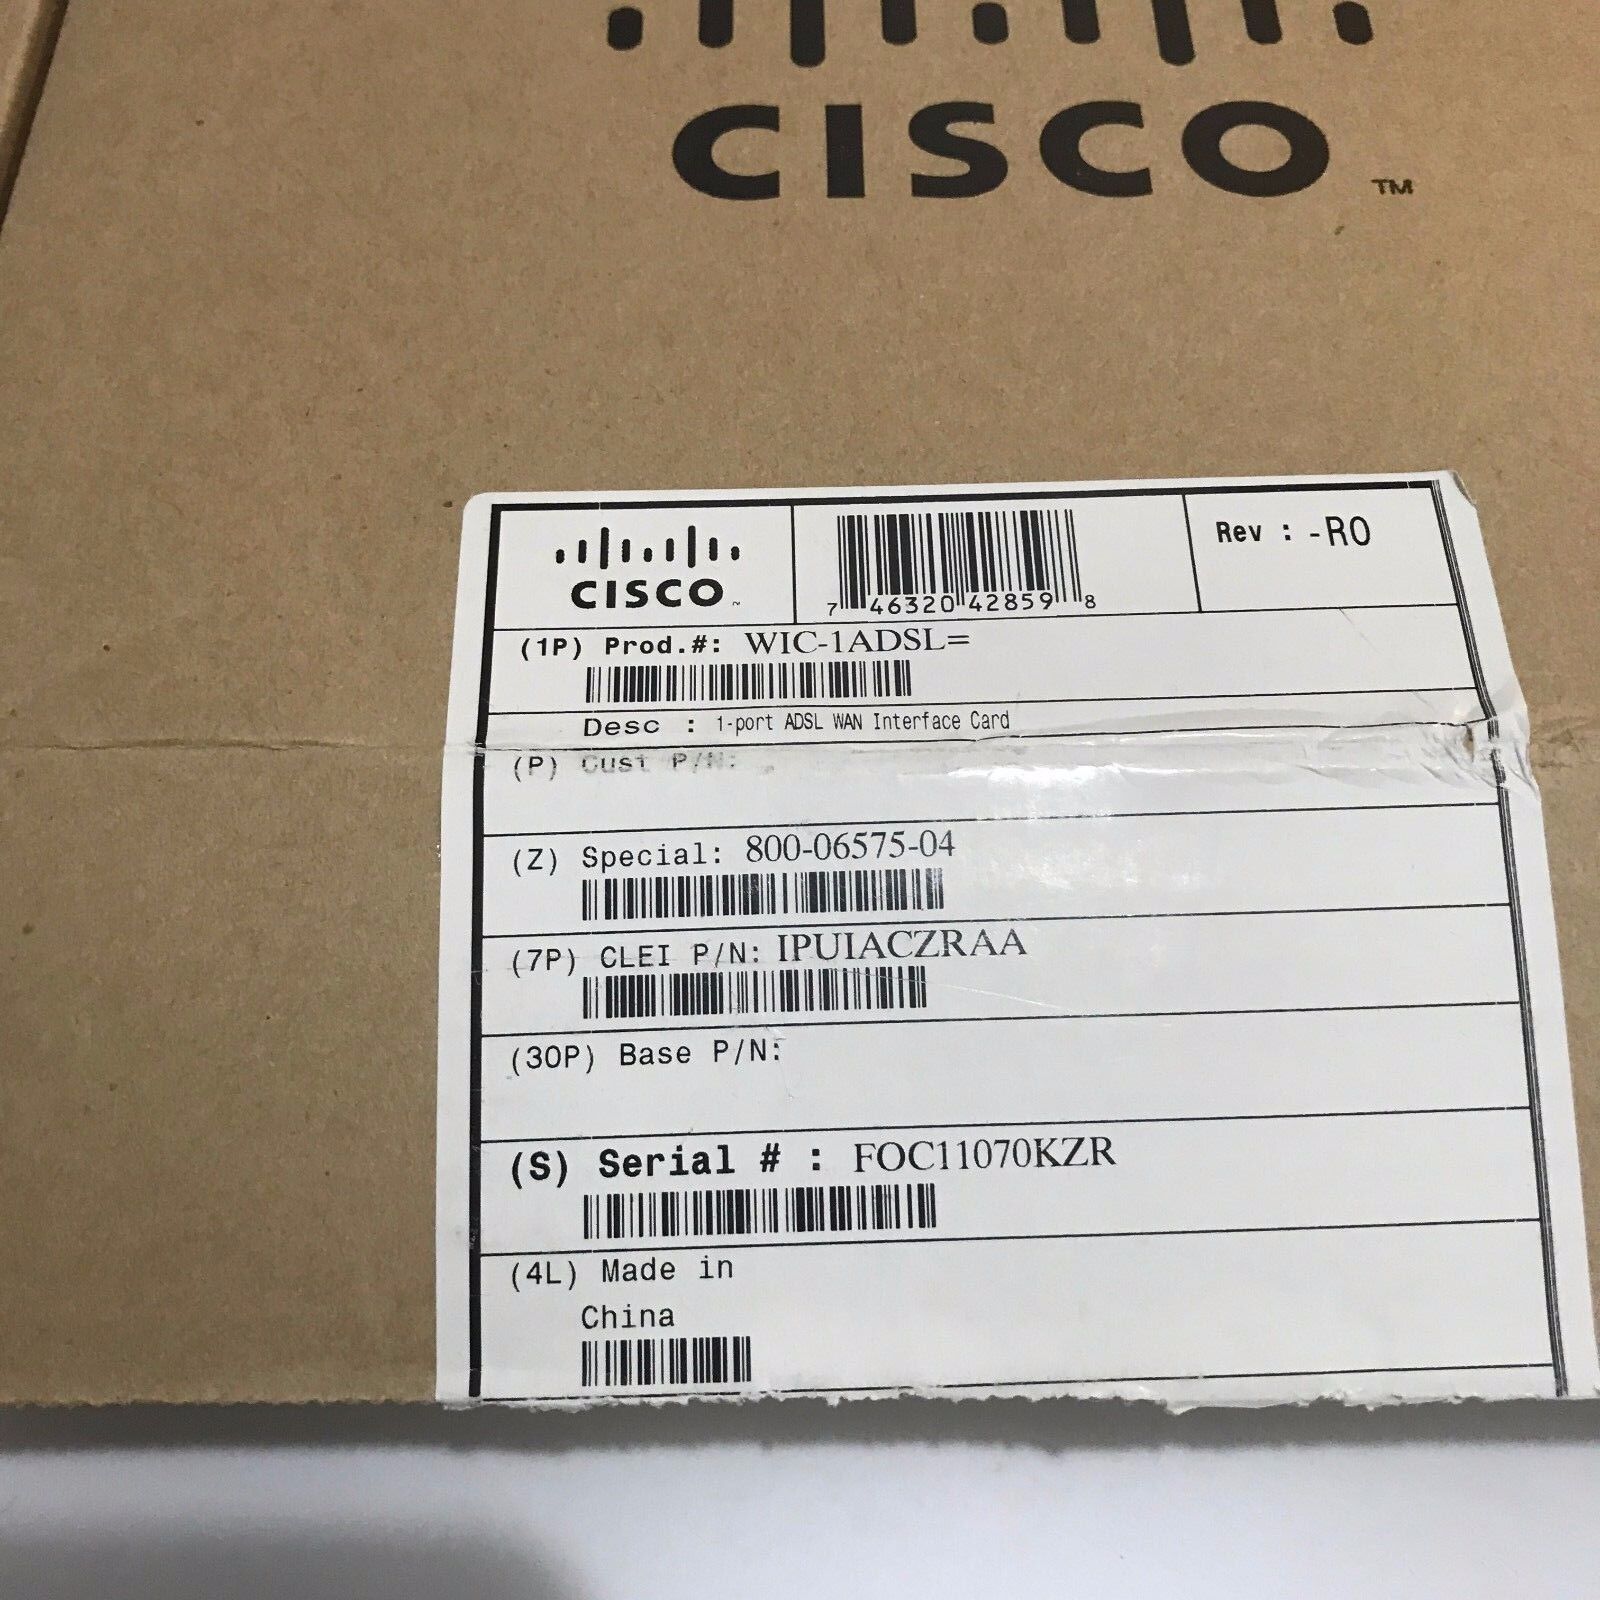 Cisco WIC-1ADSL 1-port ADSL WAN Interface Card NEW